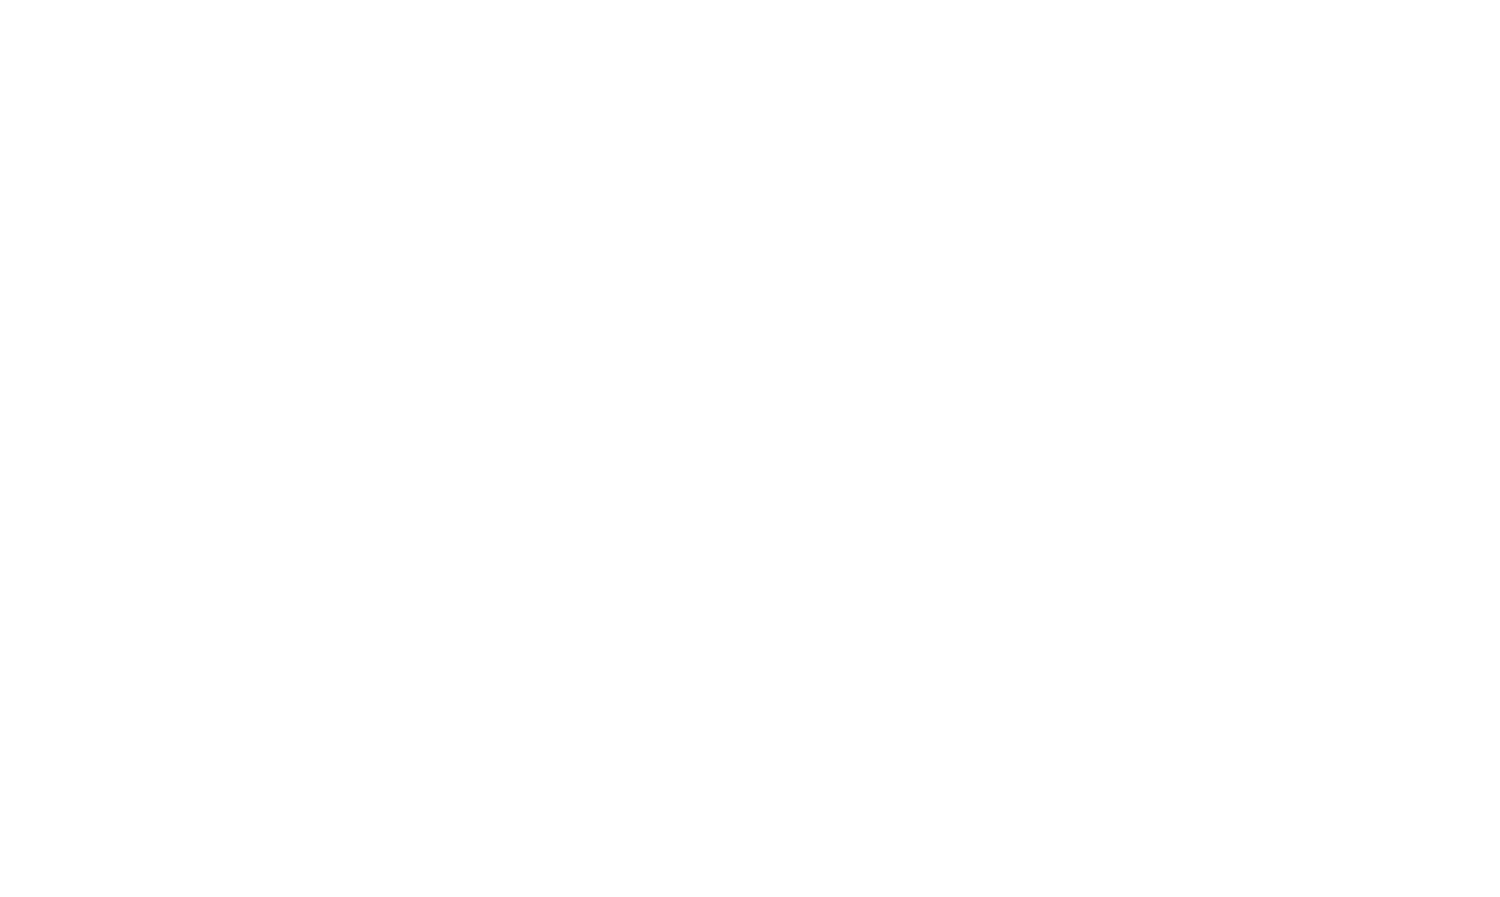 The Jungle Room